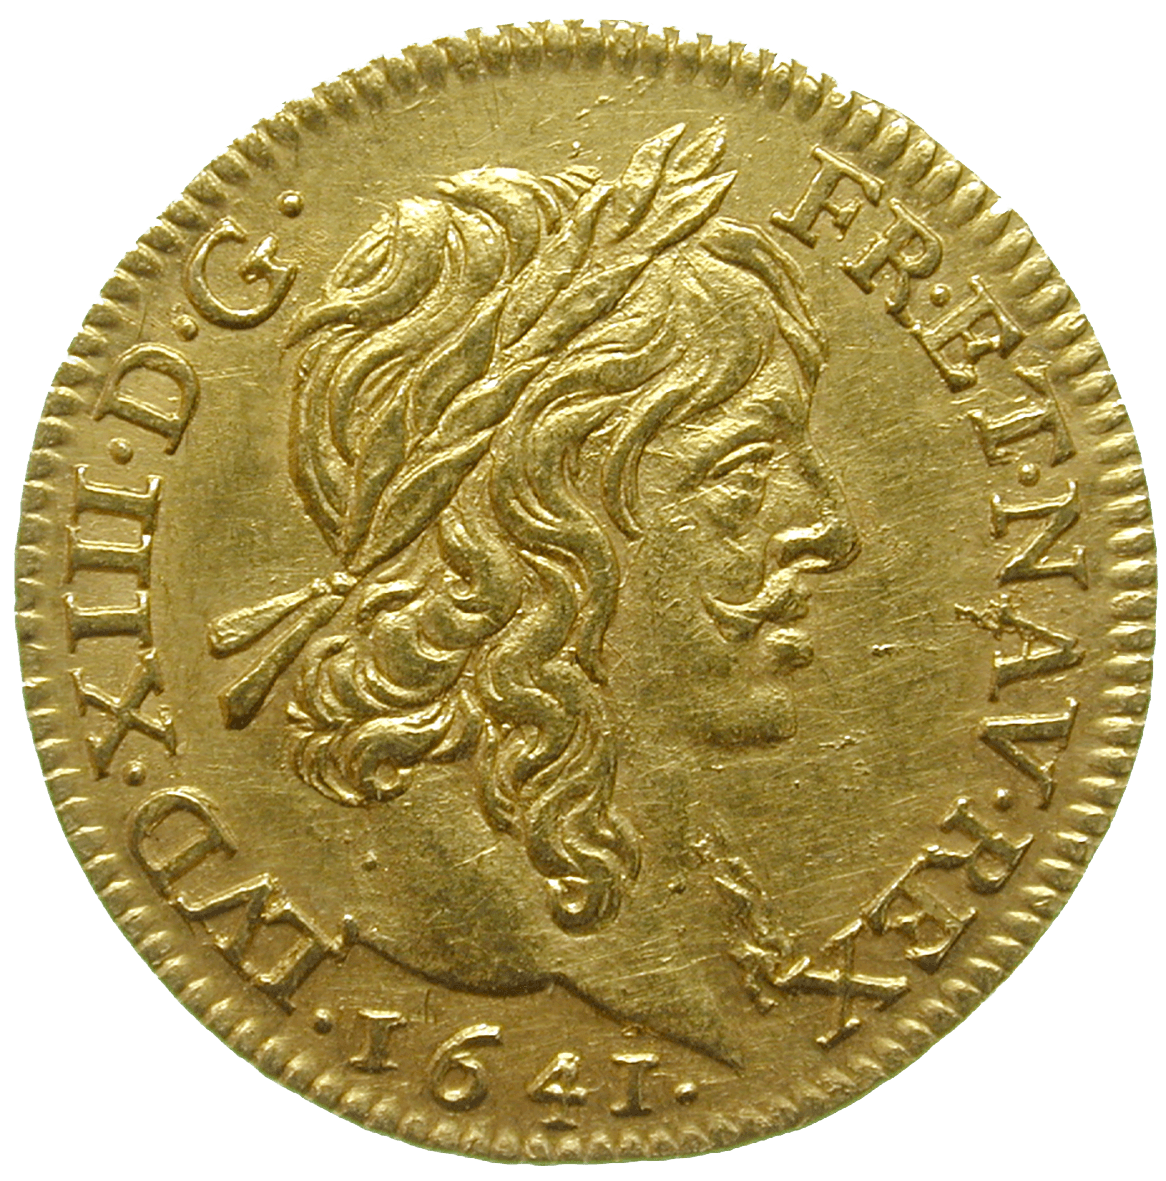 Königreich Frankreich, Ludwig XIII., 1/2 Louis d'or 1641 (obverse)